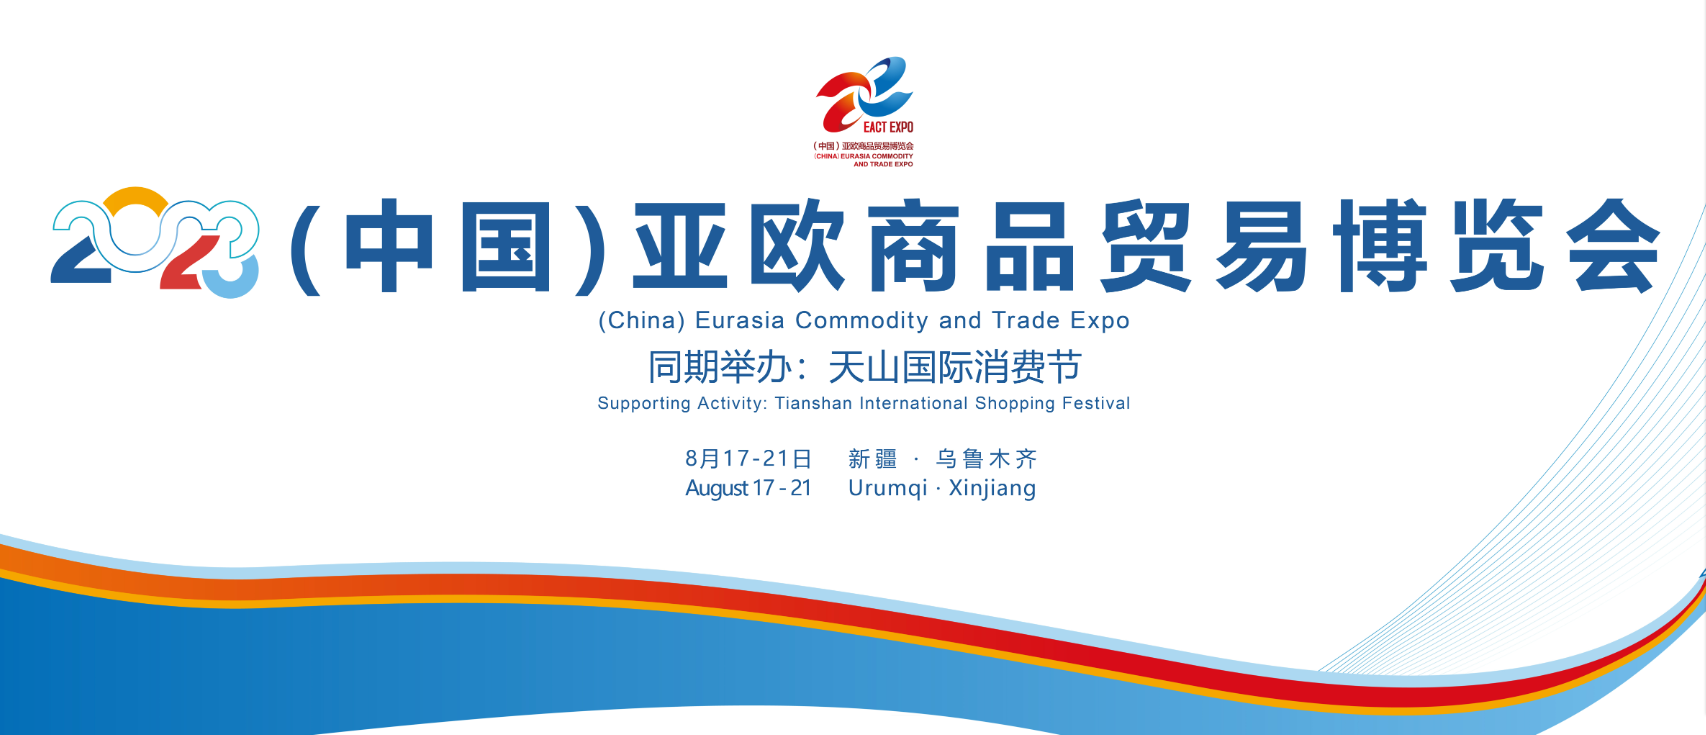 SFQ to Showcase Latest Energy Storage Solutions at China-Eurasia Expo